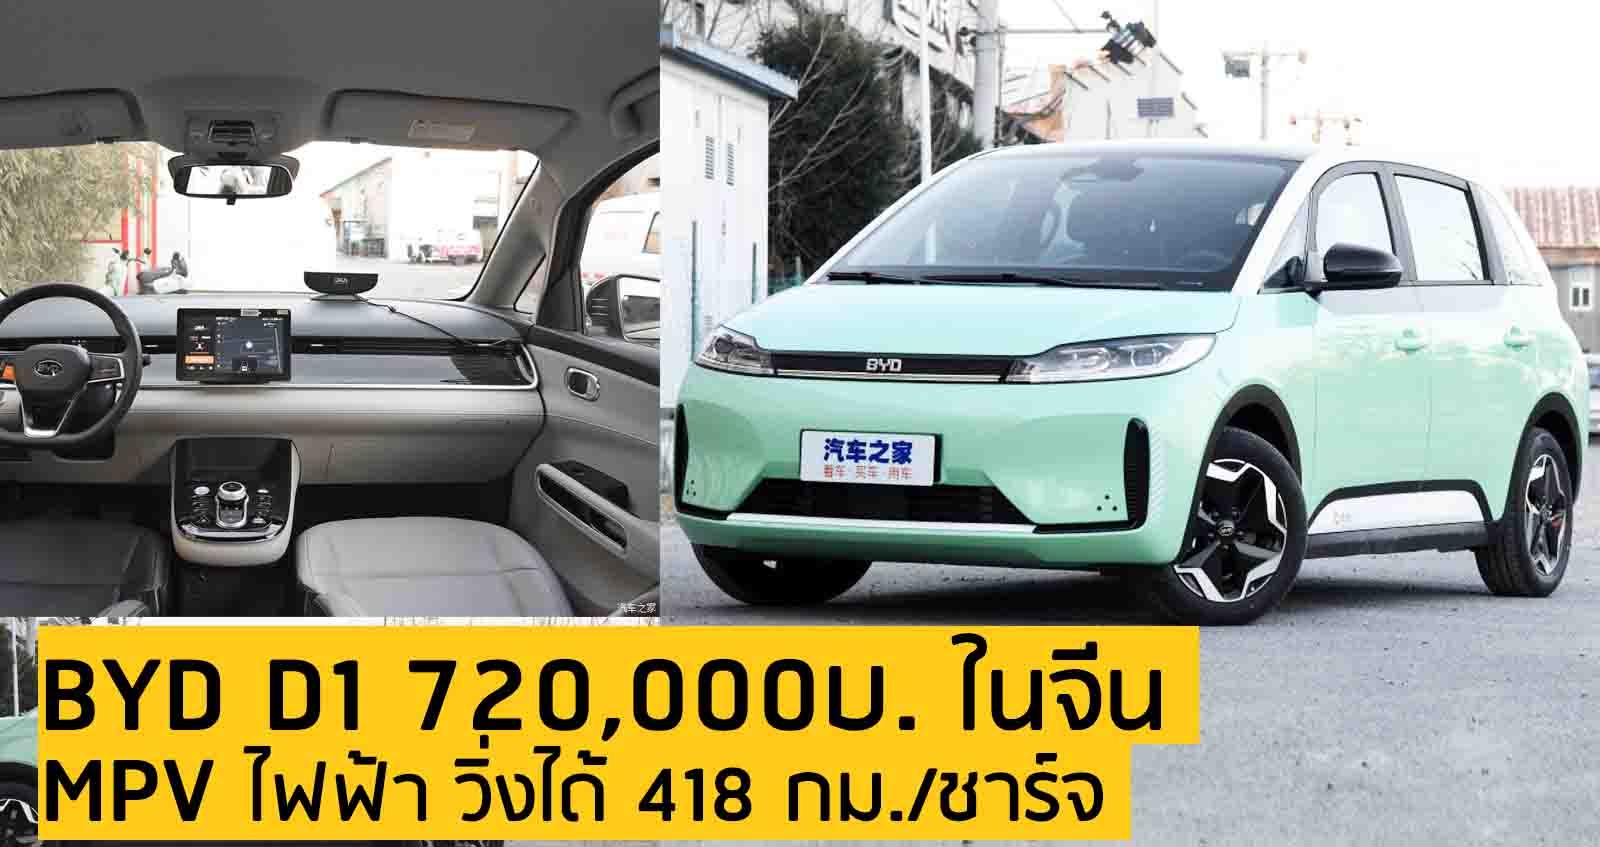 BYD D1 EV MPV ราคา 720,000 บาท วิ่งได้ 418 กม./ชาร์จ ในจีน